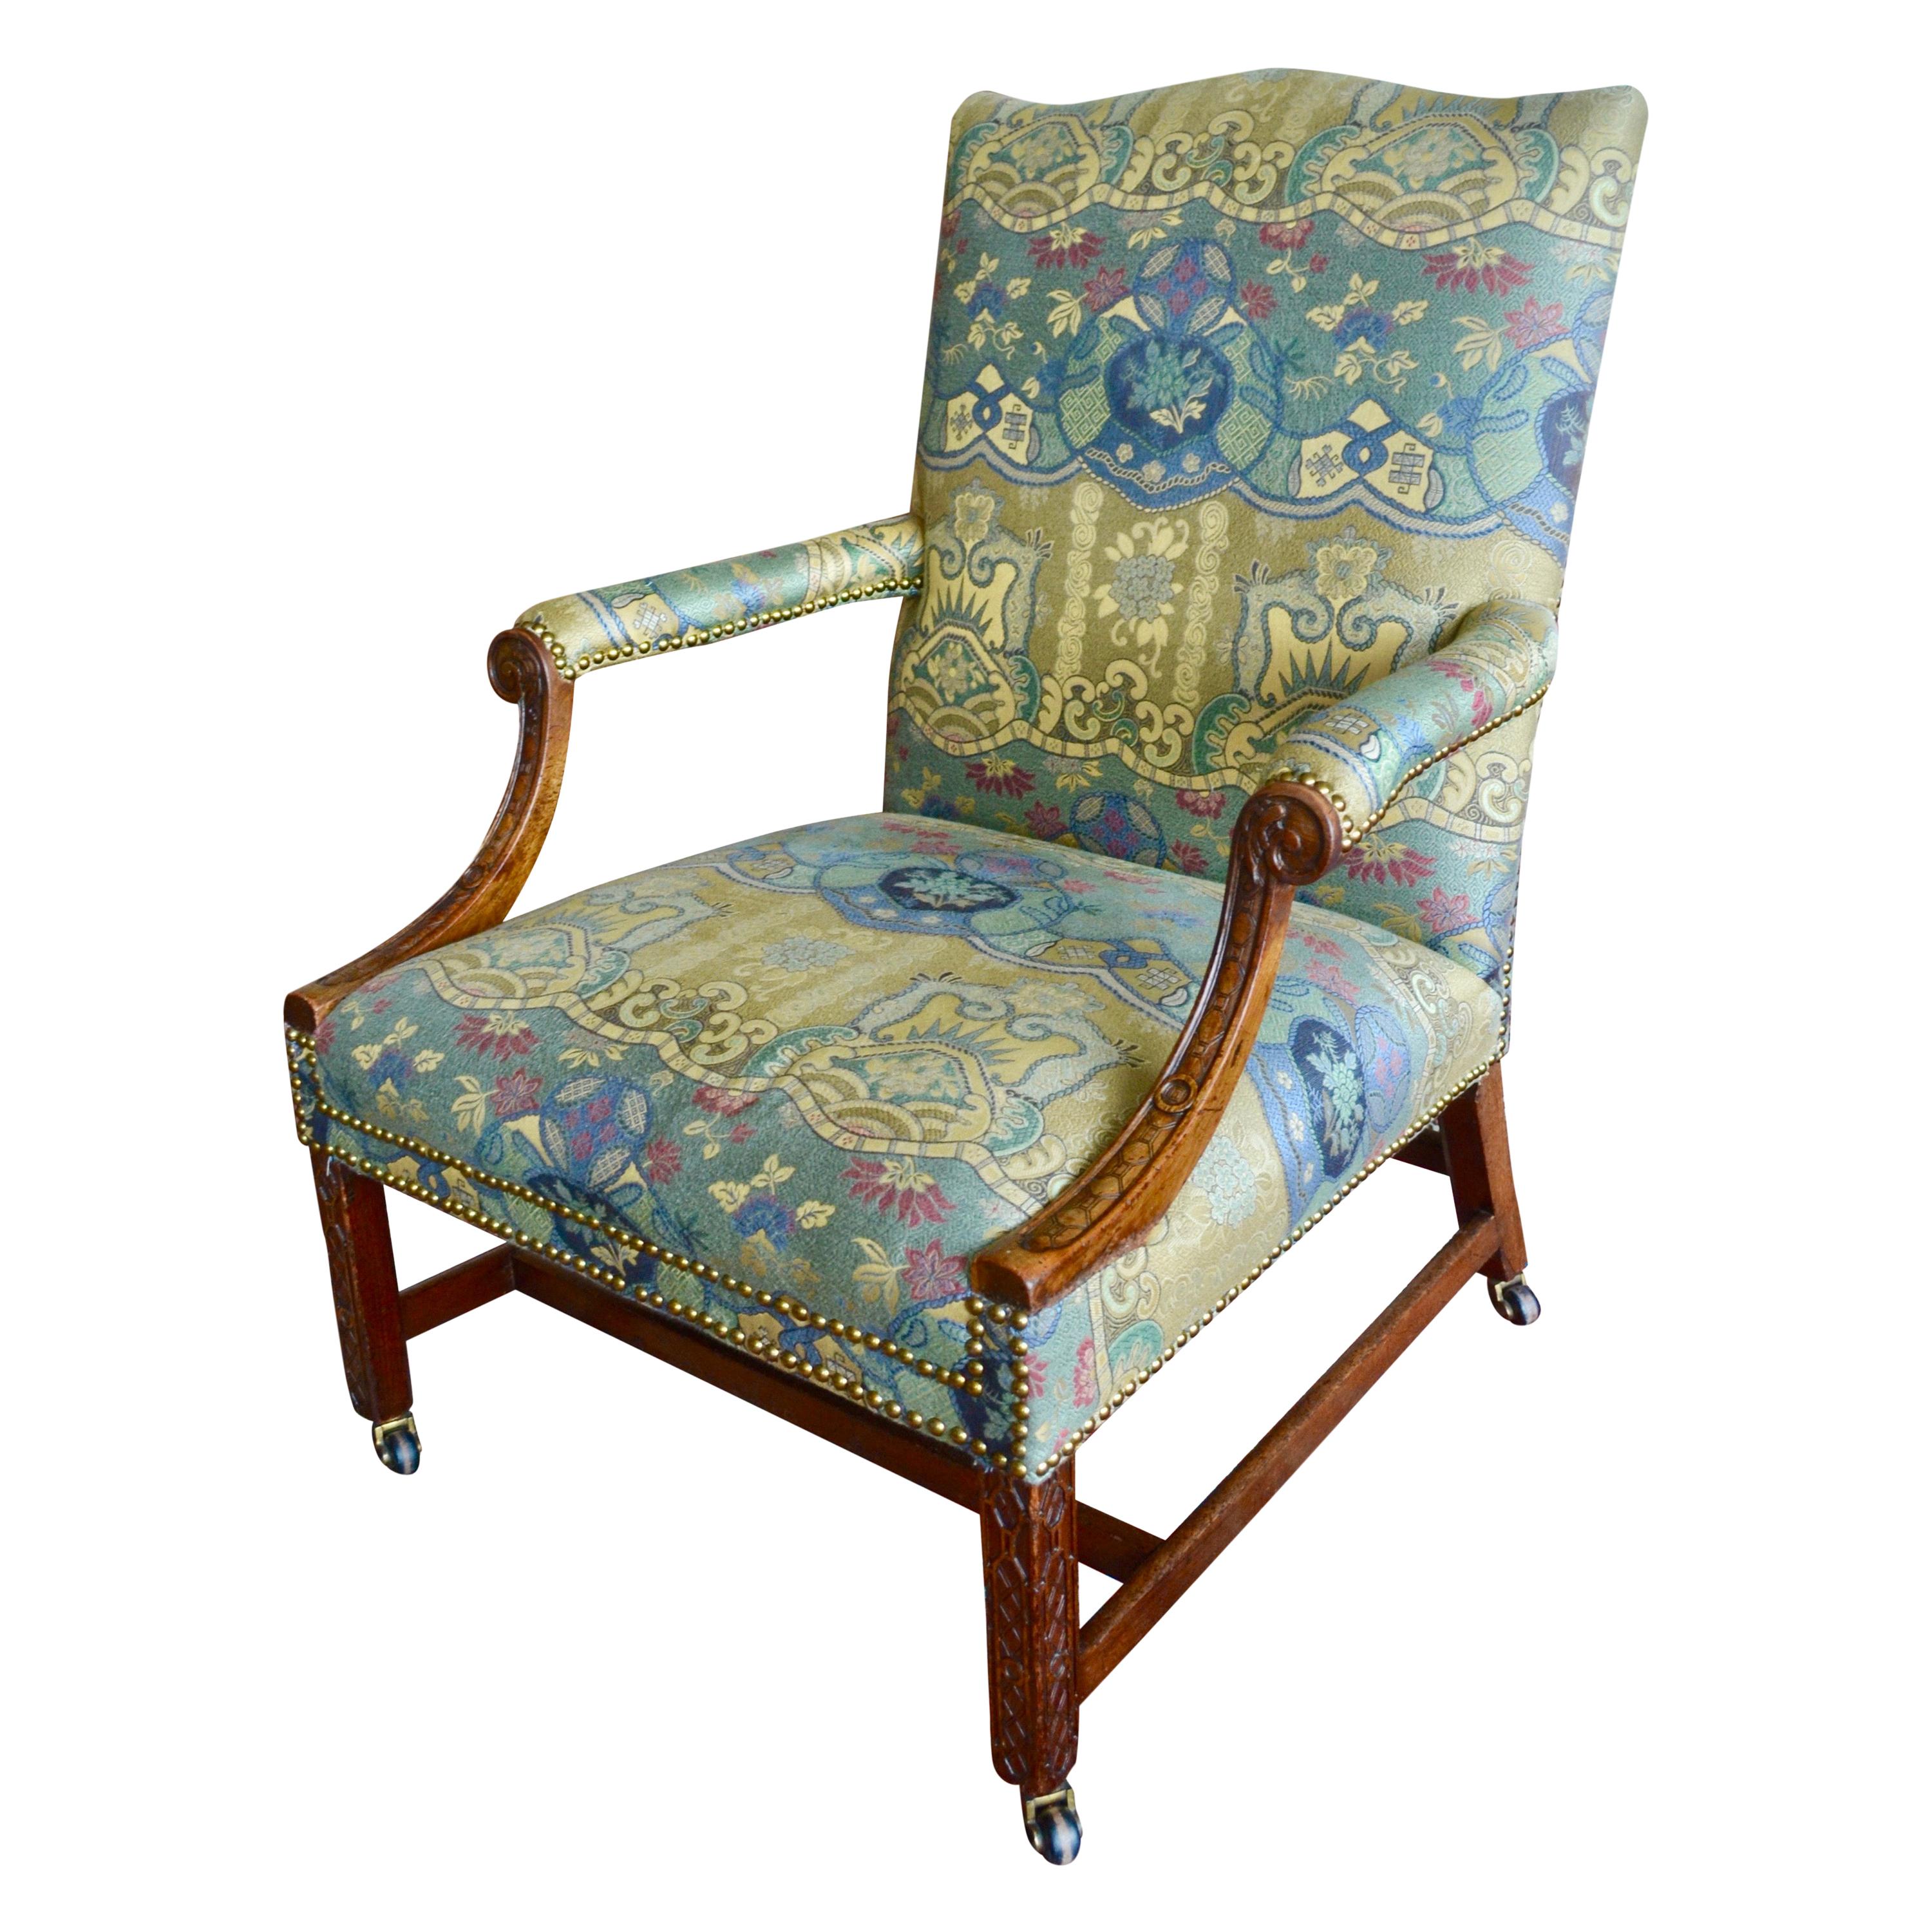 Period George III Gainsborough Library Chair